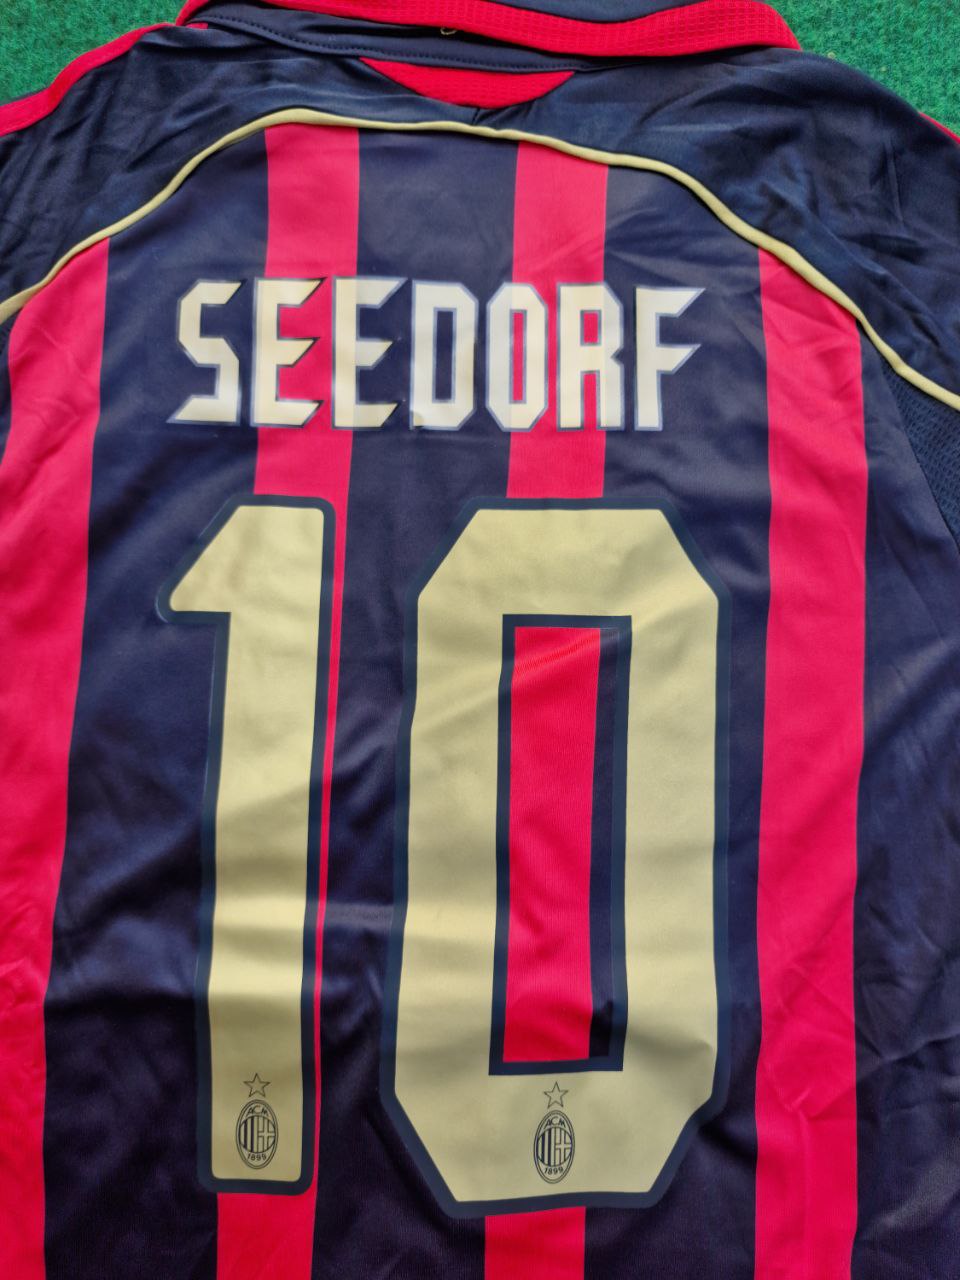 Seedorf AC Milan Retro Football Jerseu